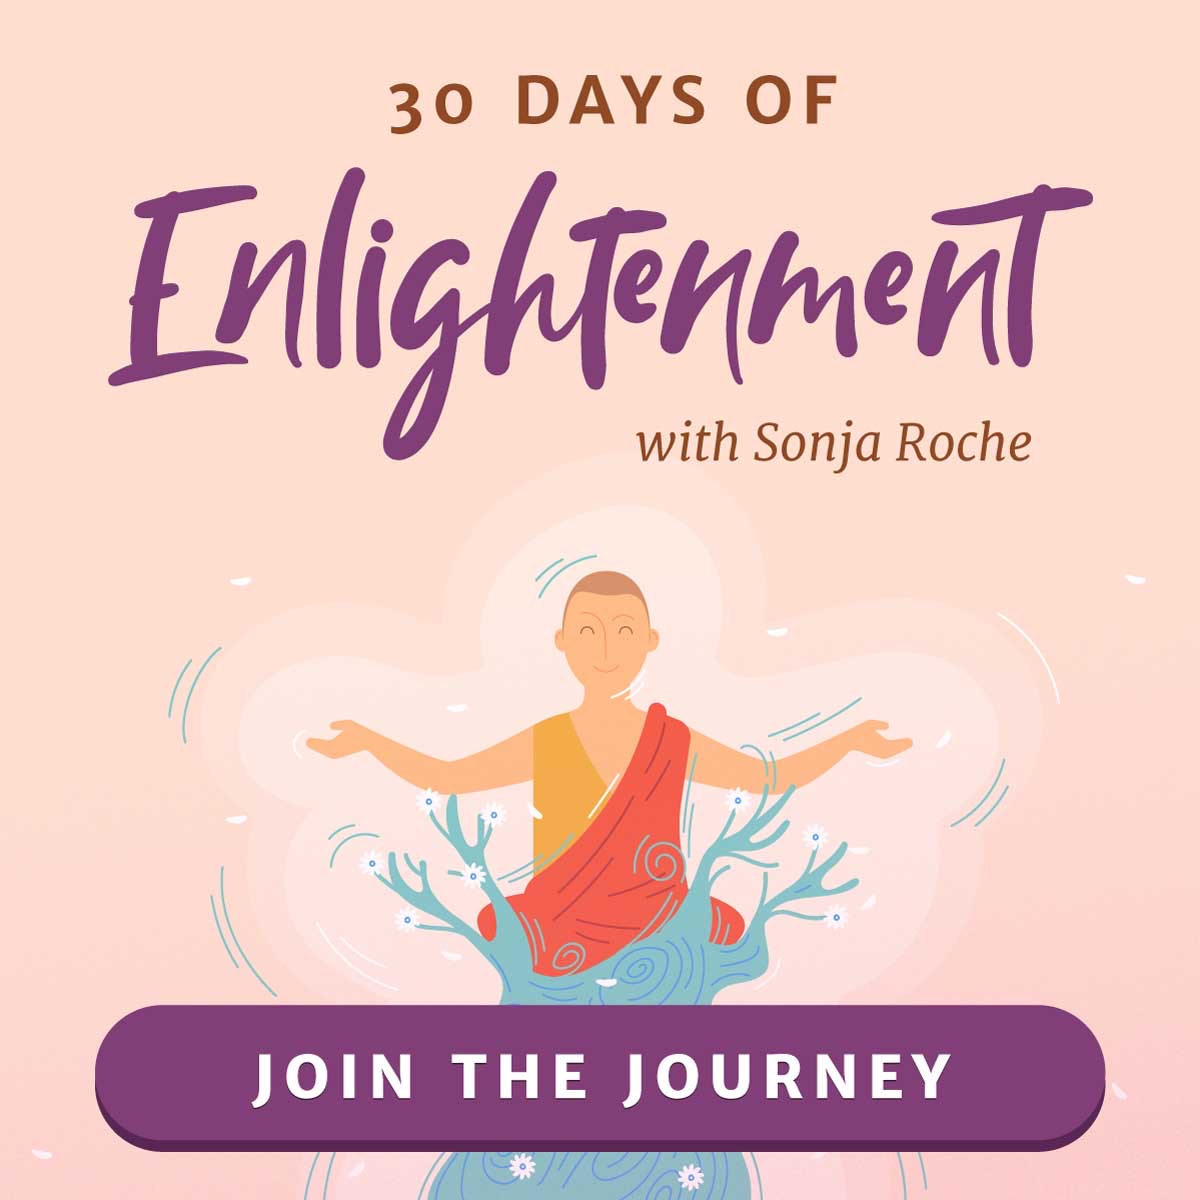 30 Days of Enlightenment